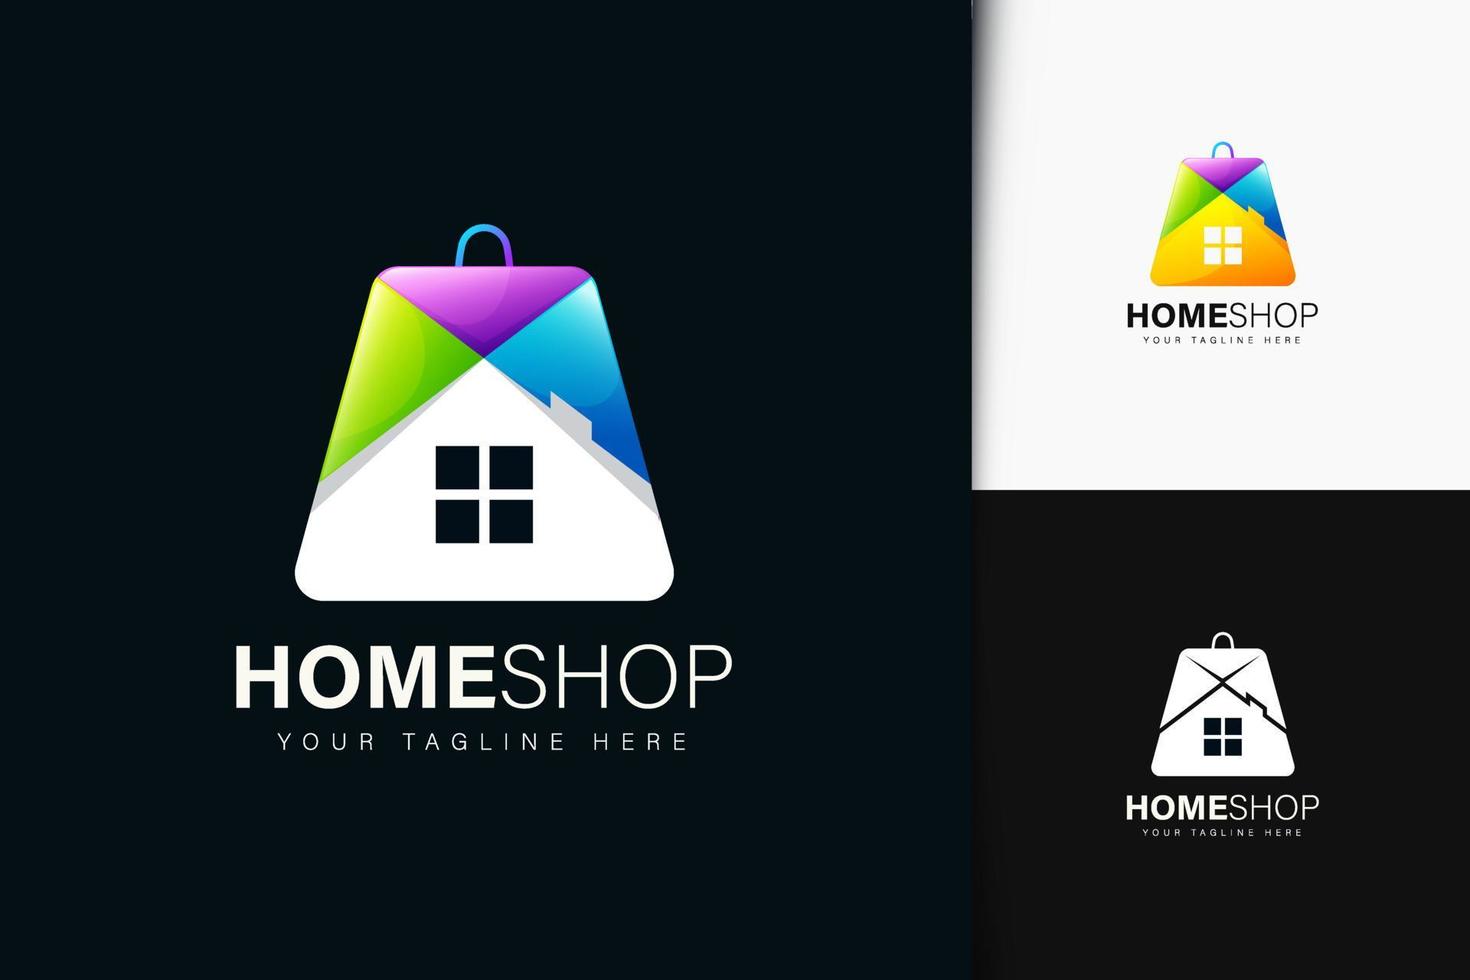 Home shop logo design with gradient vector